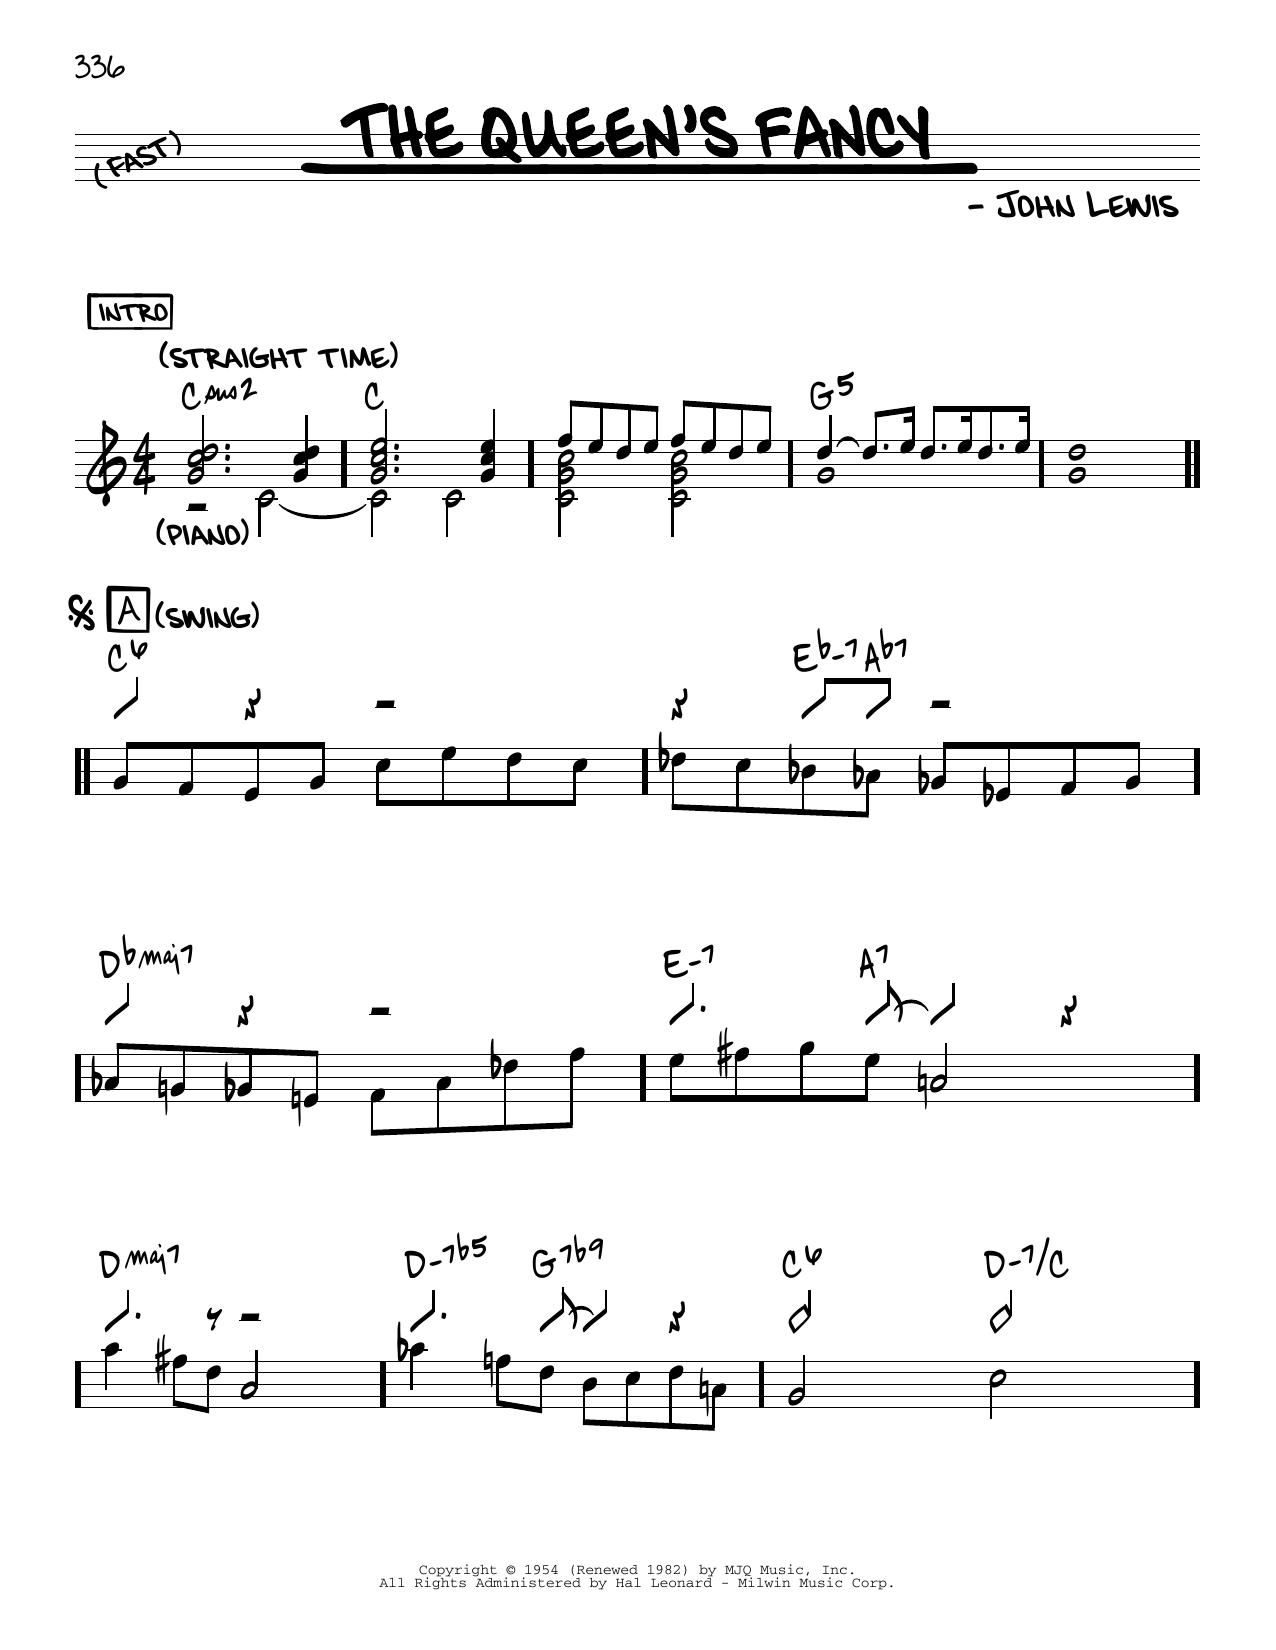 Download John Lewis The Queen's Fancy Sheet Music